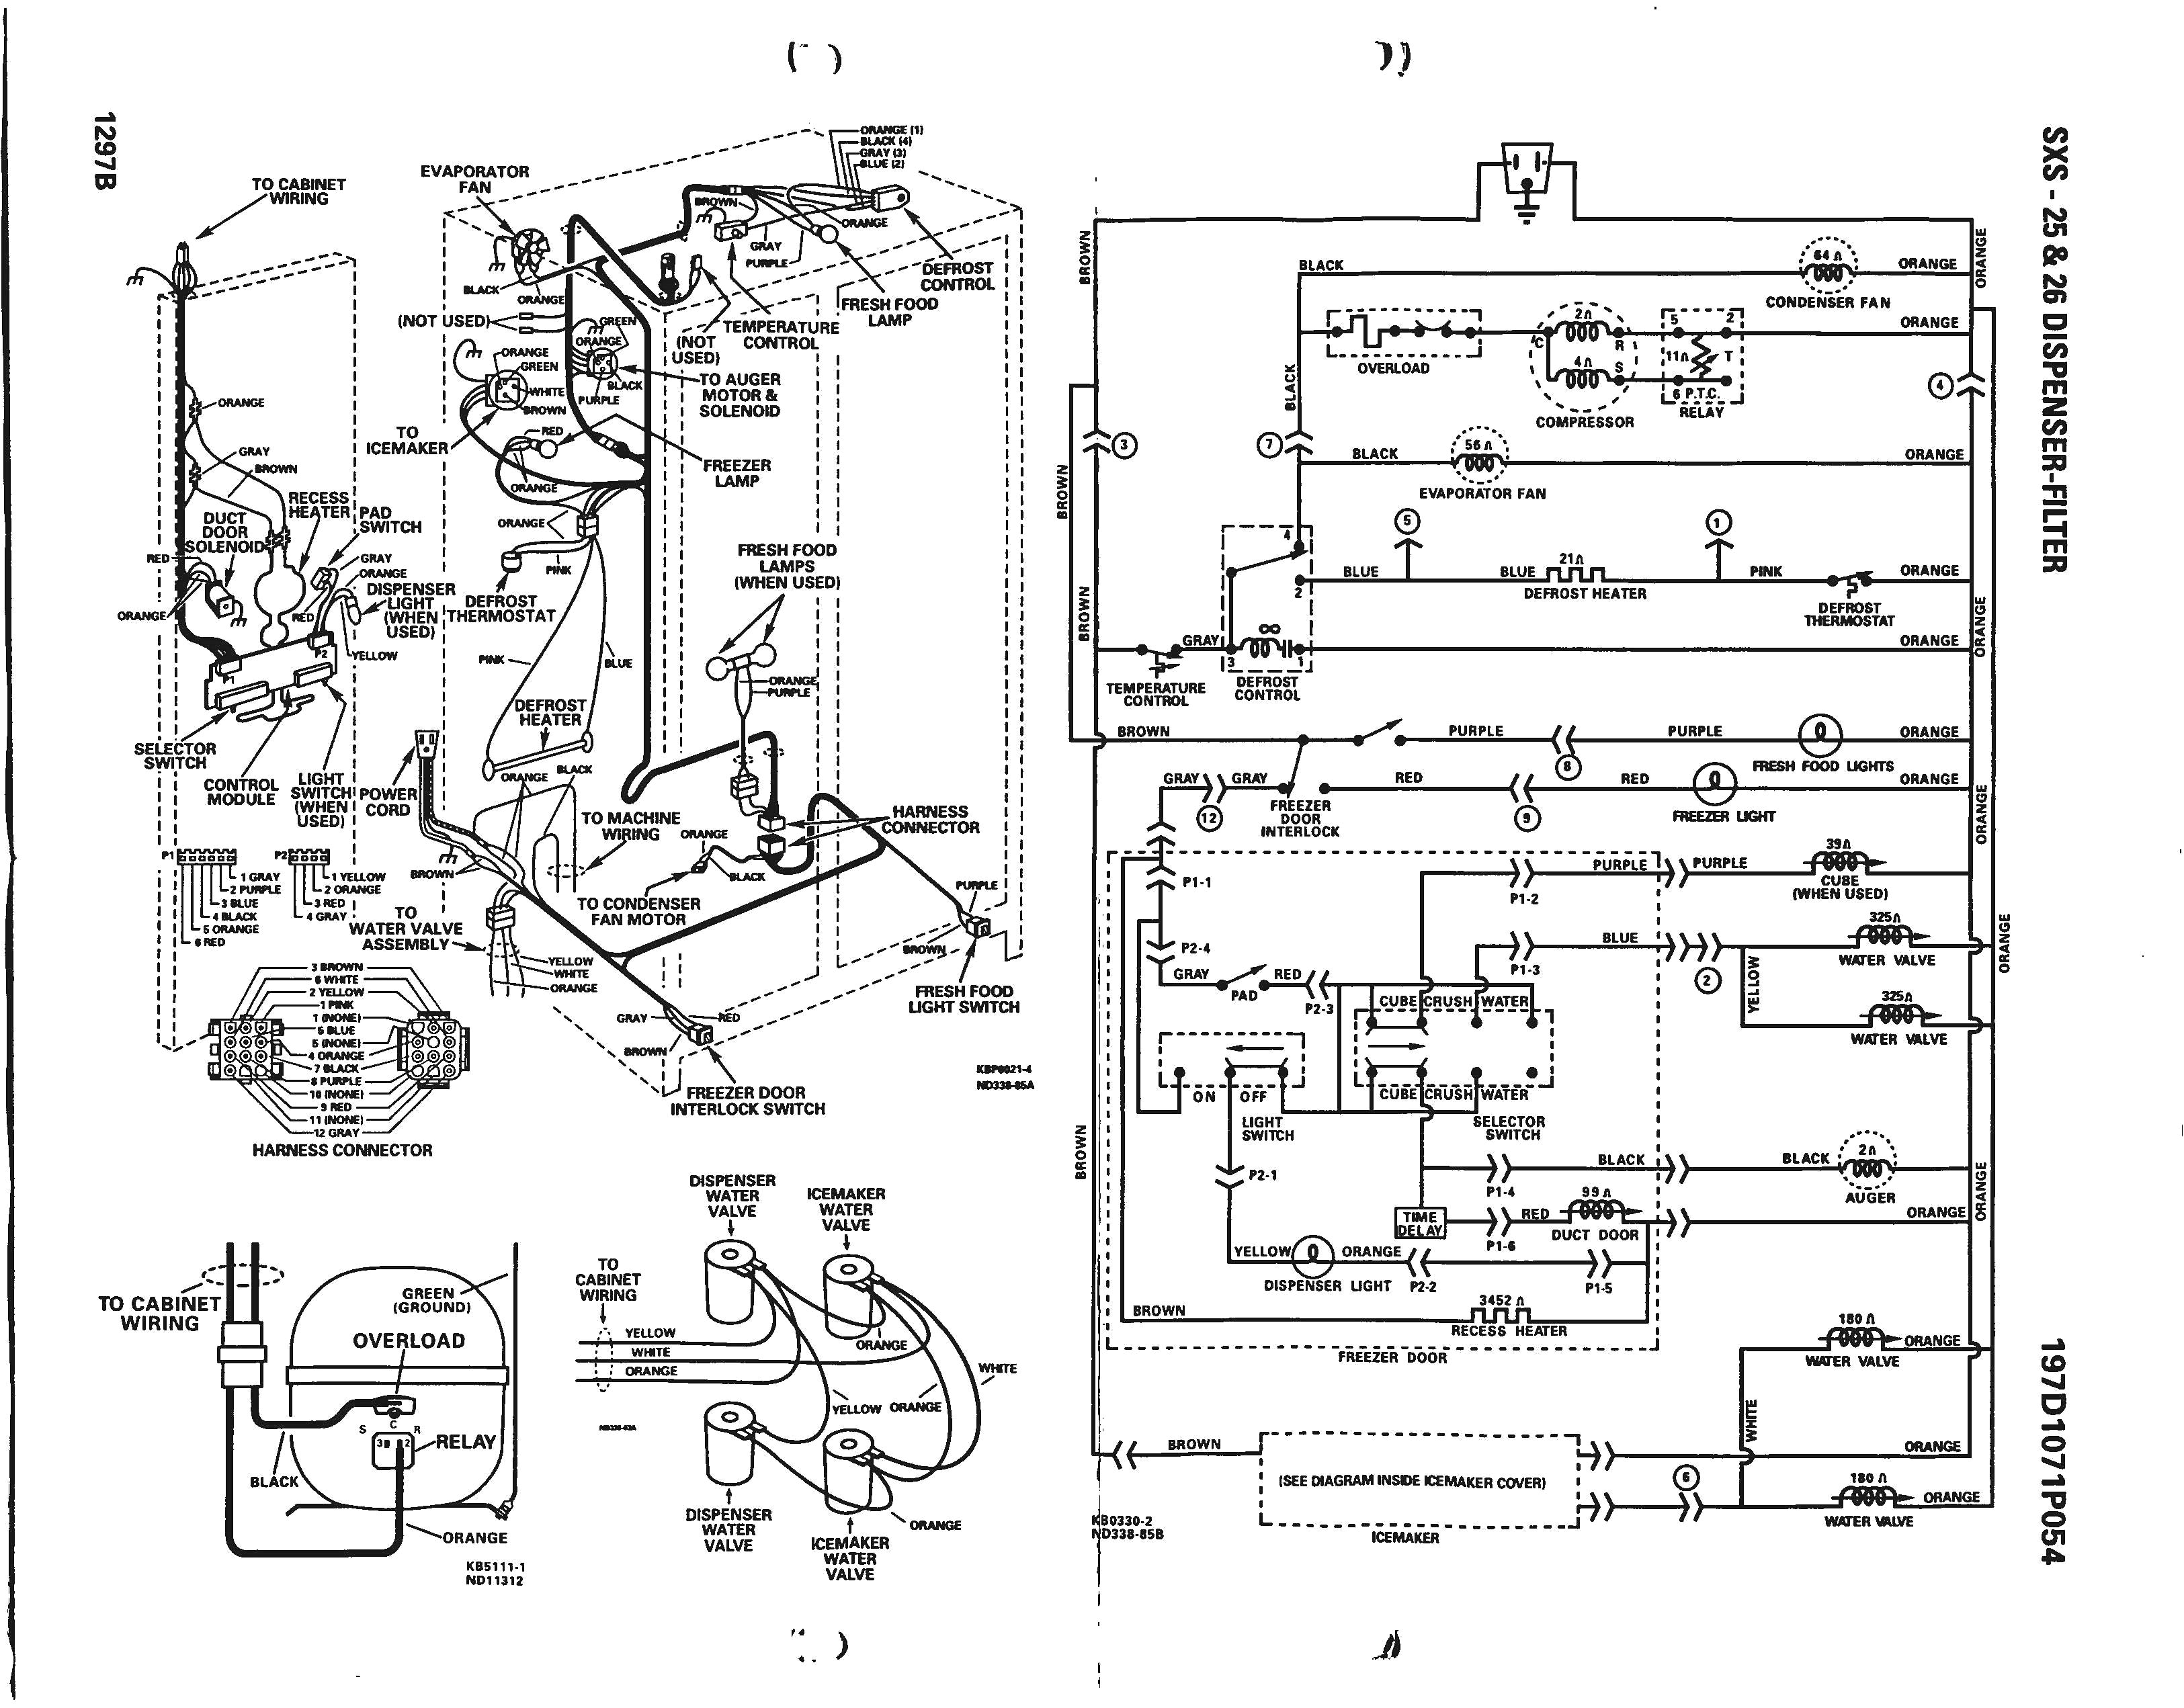 imperial wiring schematic wiring diagram show imperial range wiring diagram imperial range wiring diagram